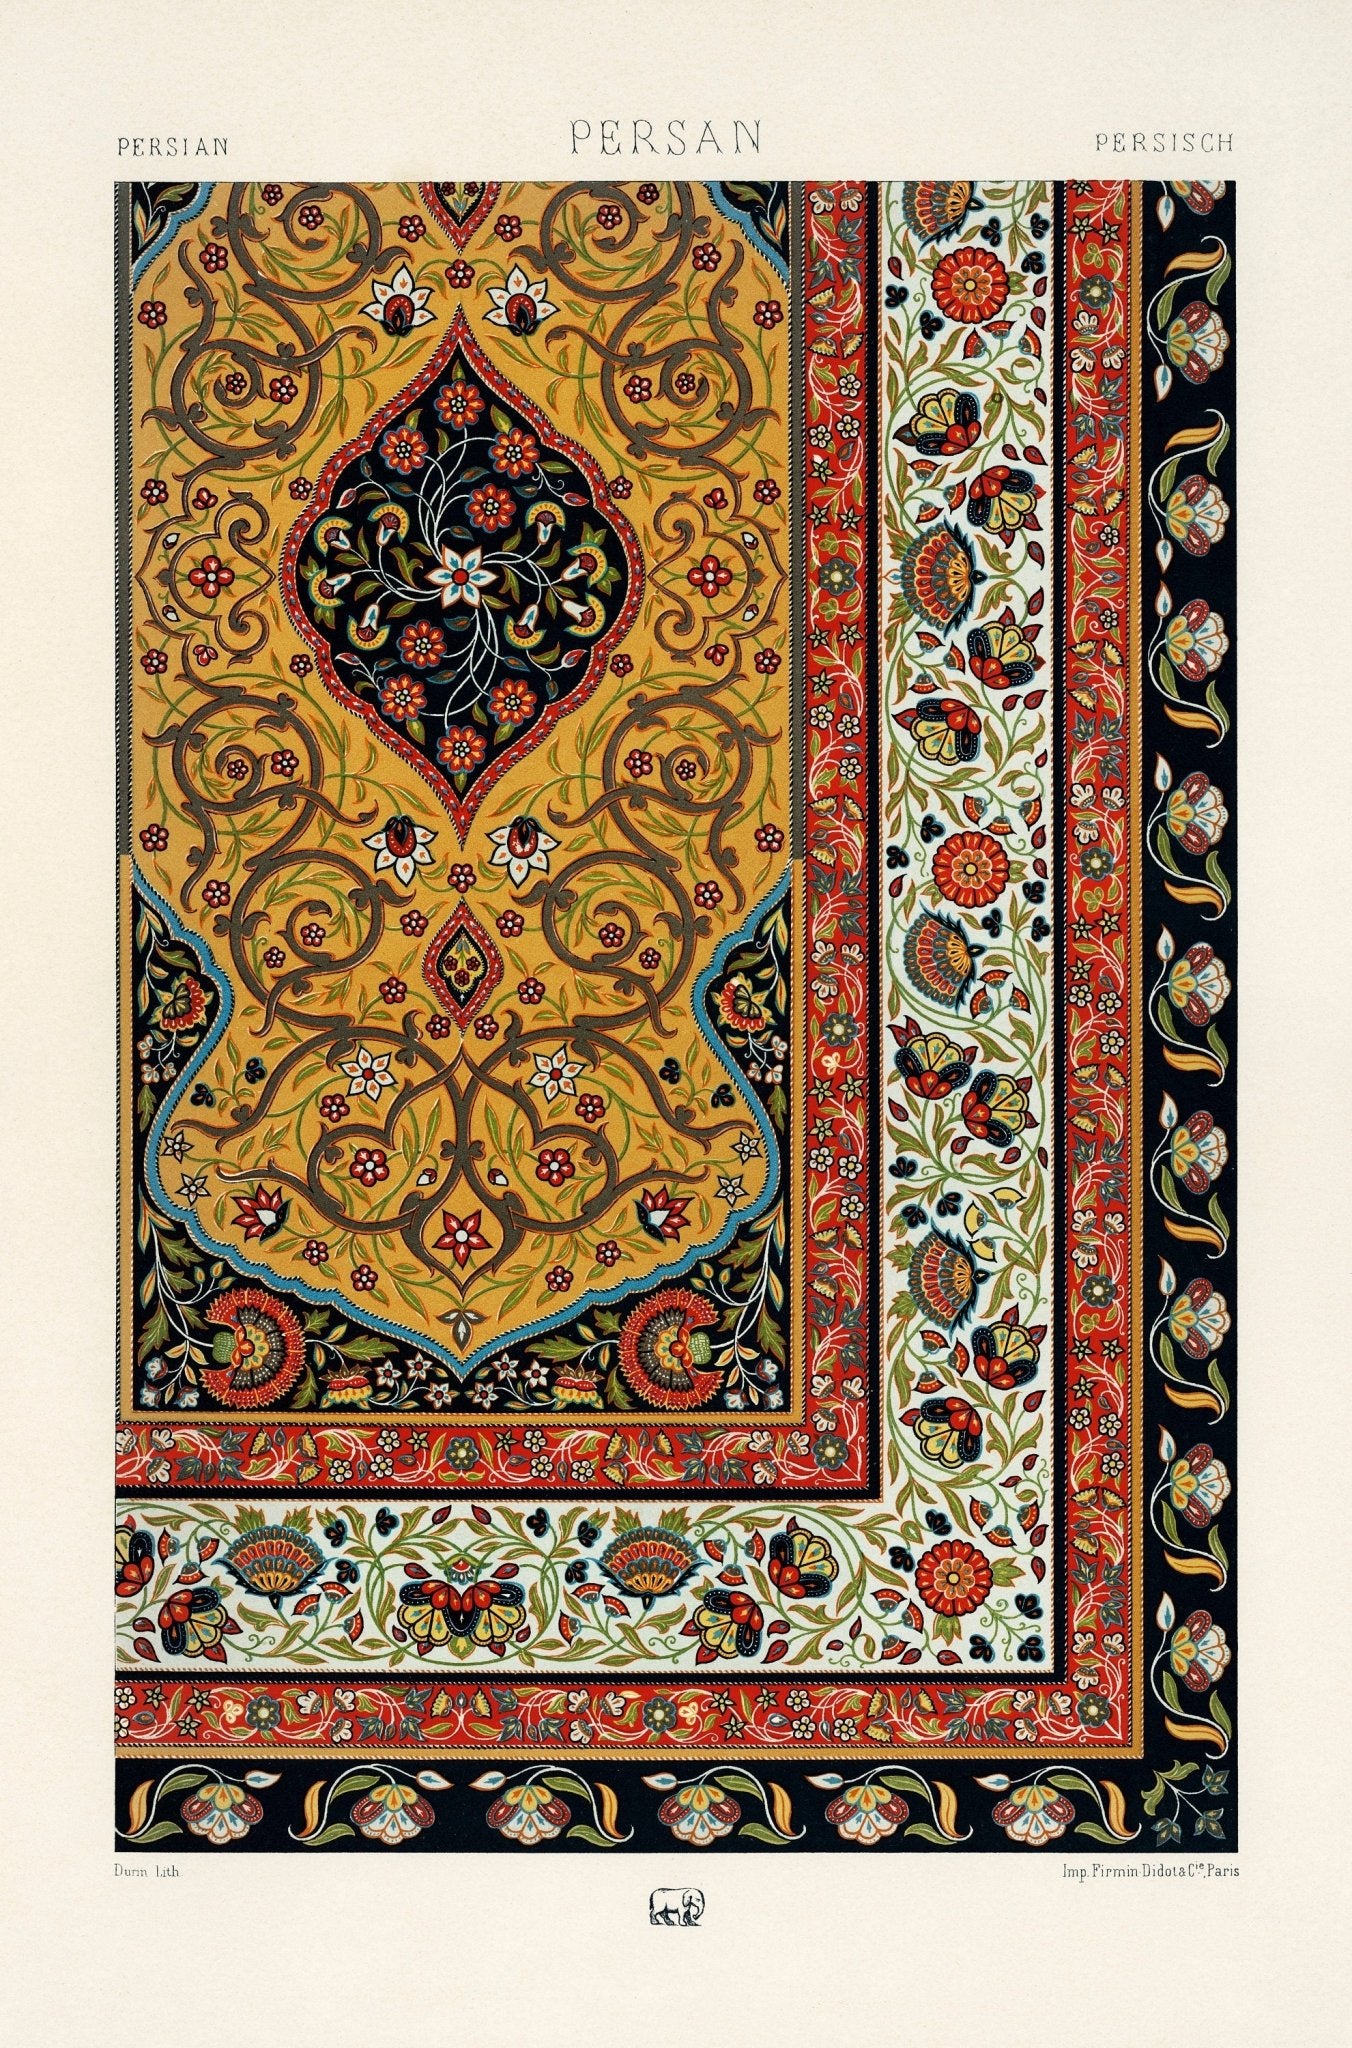 ALBERT RACINET – Lithographie mit persischem Muster aus „L'ornement Polychrome“